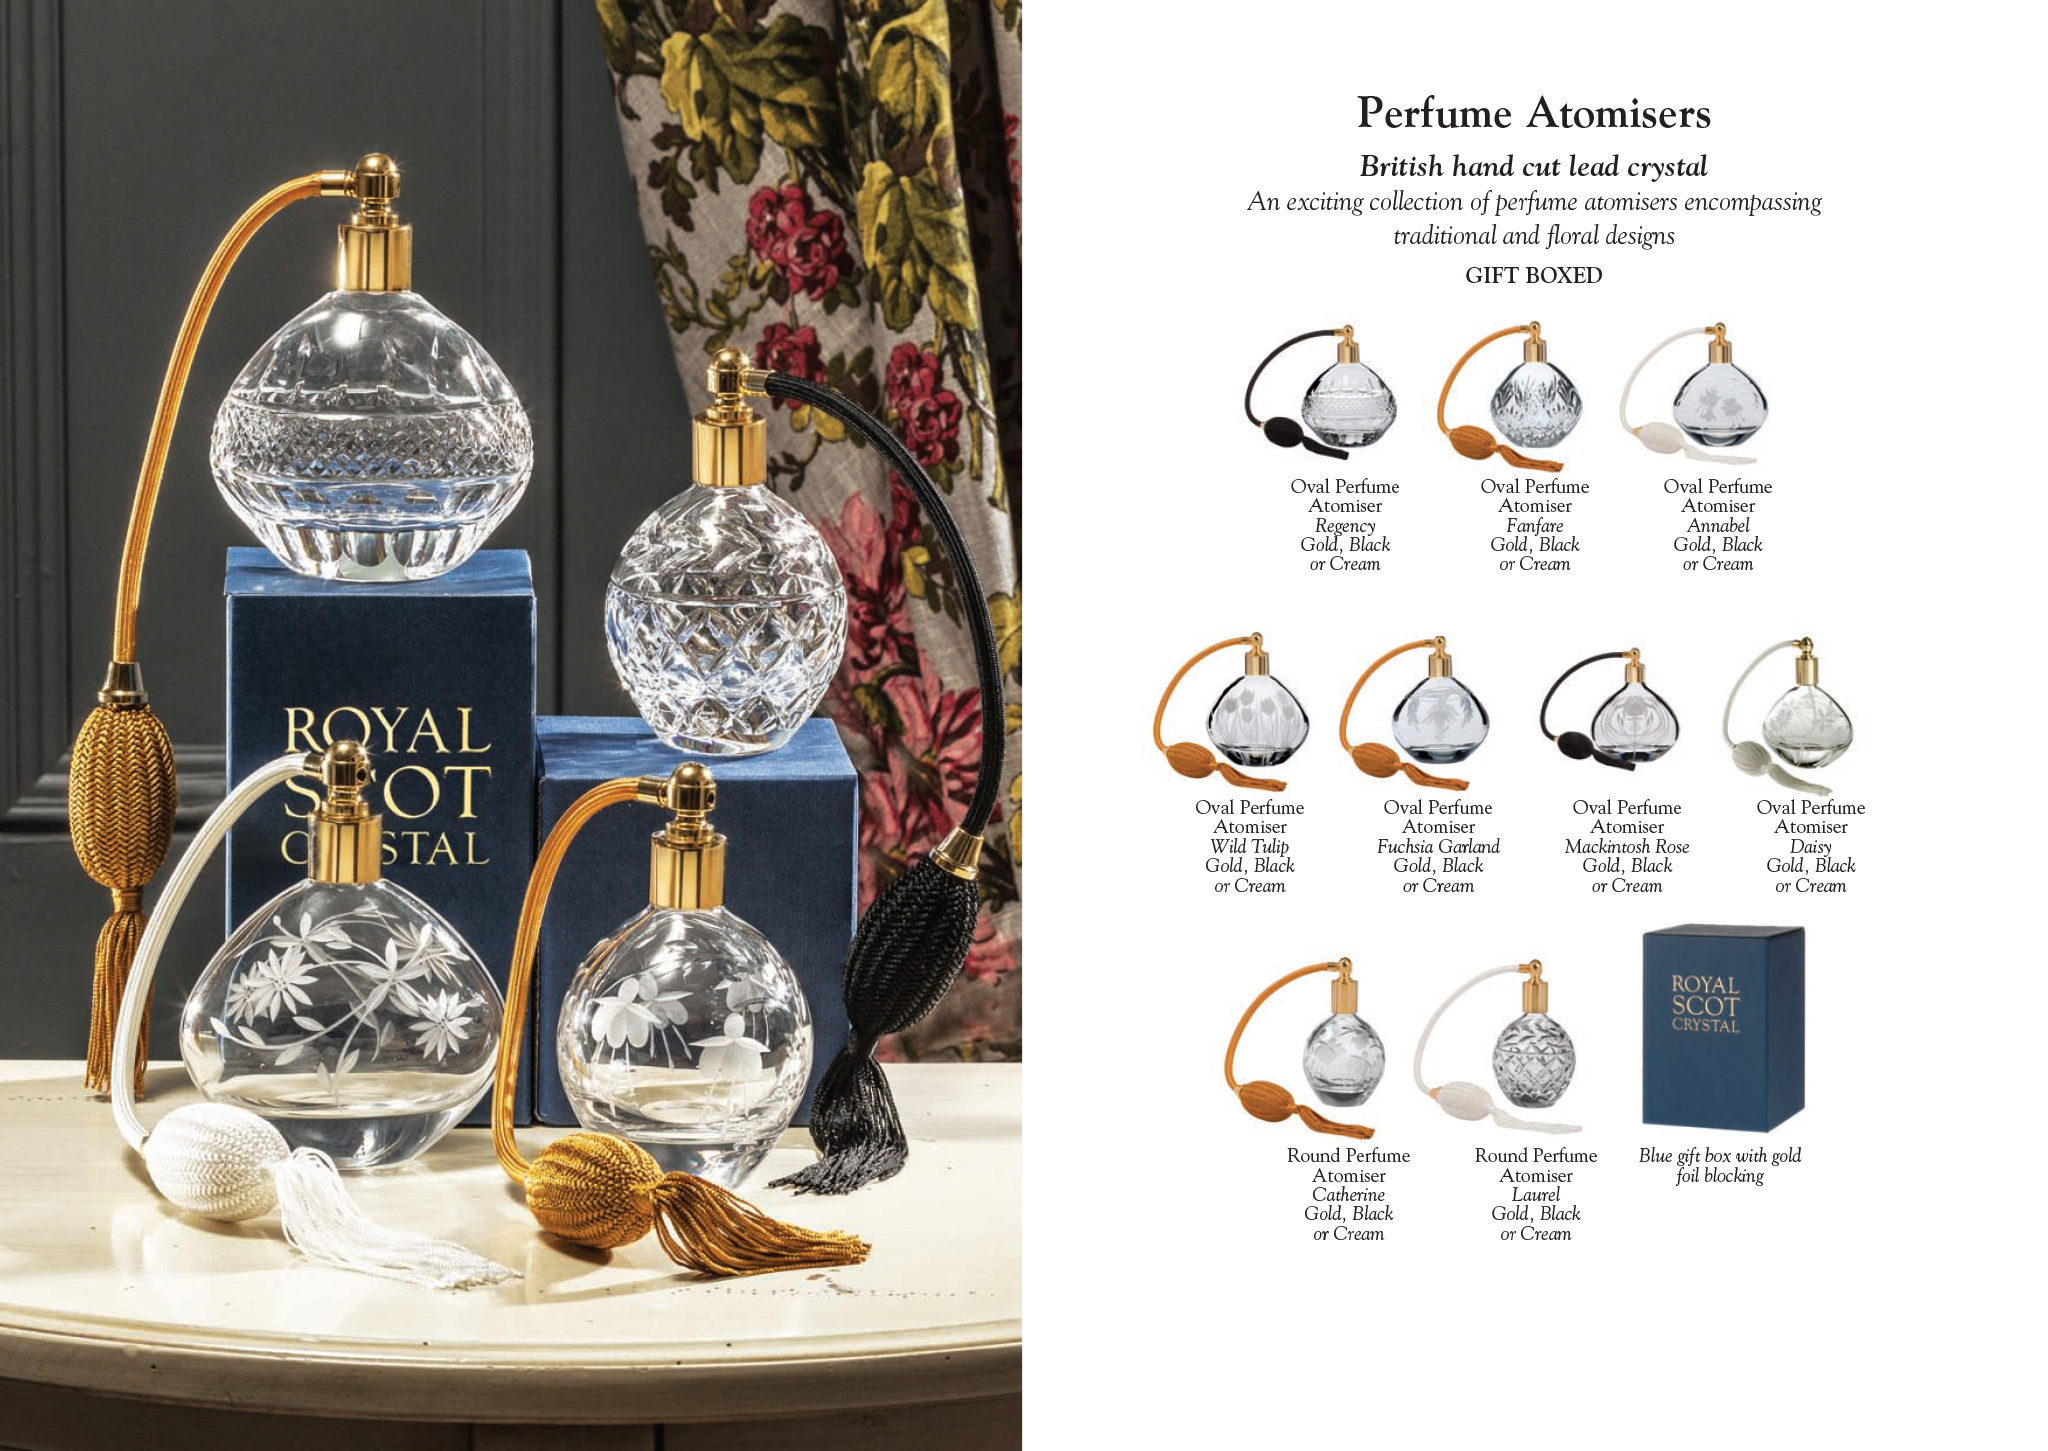 Royal Scot Crystal - Perfume Bottles & Atomisers